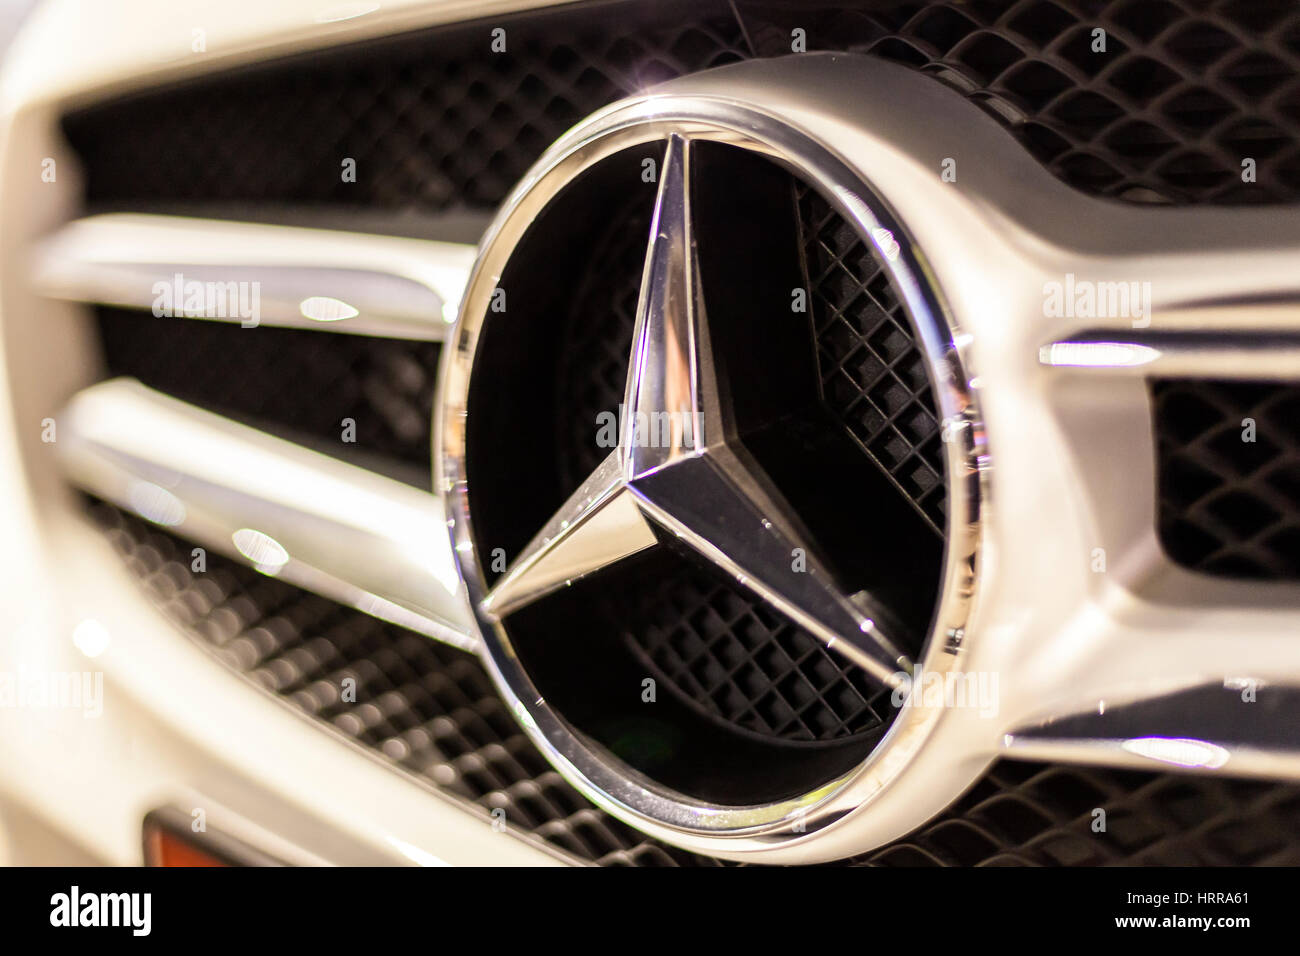 ABU DHABI, UAE - NOV 26, 2016: Mercedes Benz company logo on a car illuminated at night Stock Photo